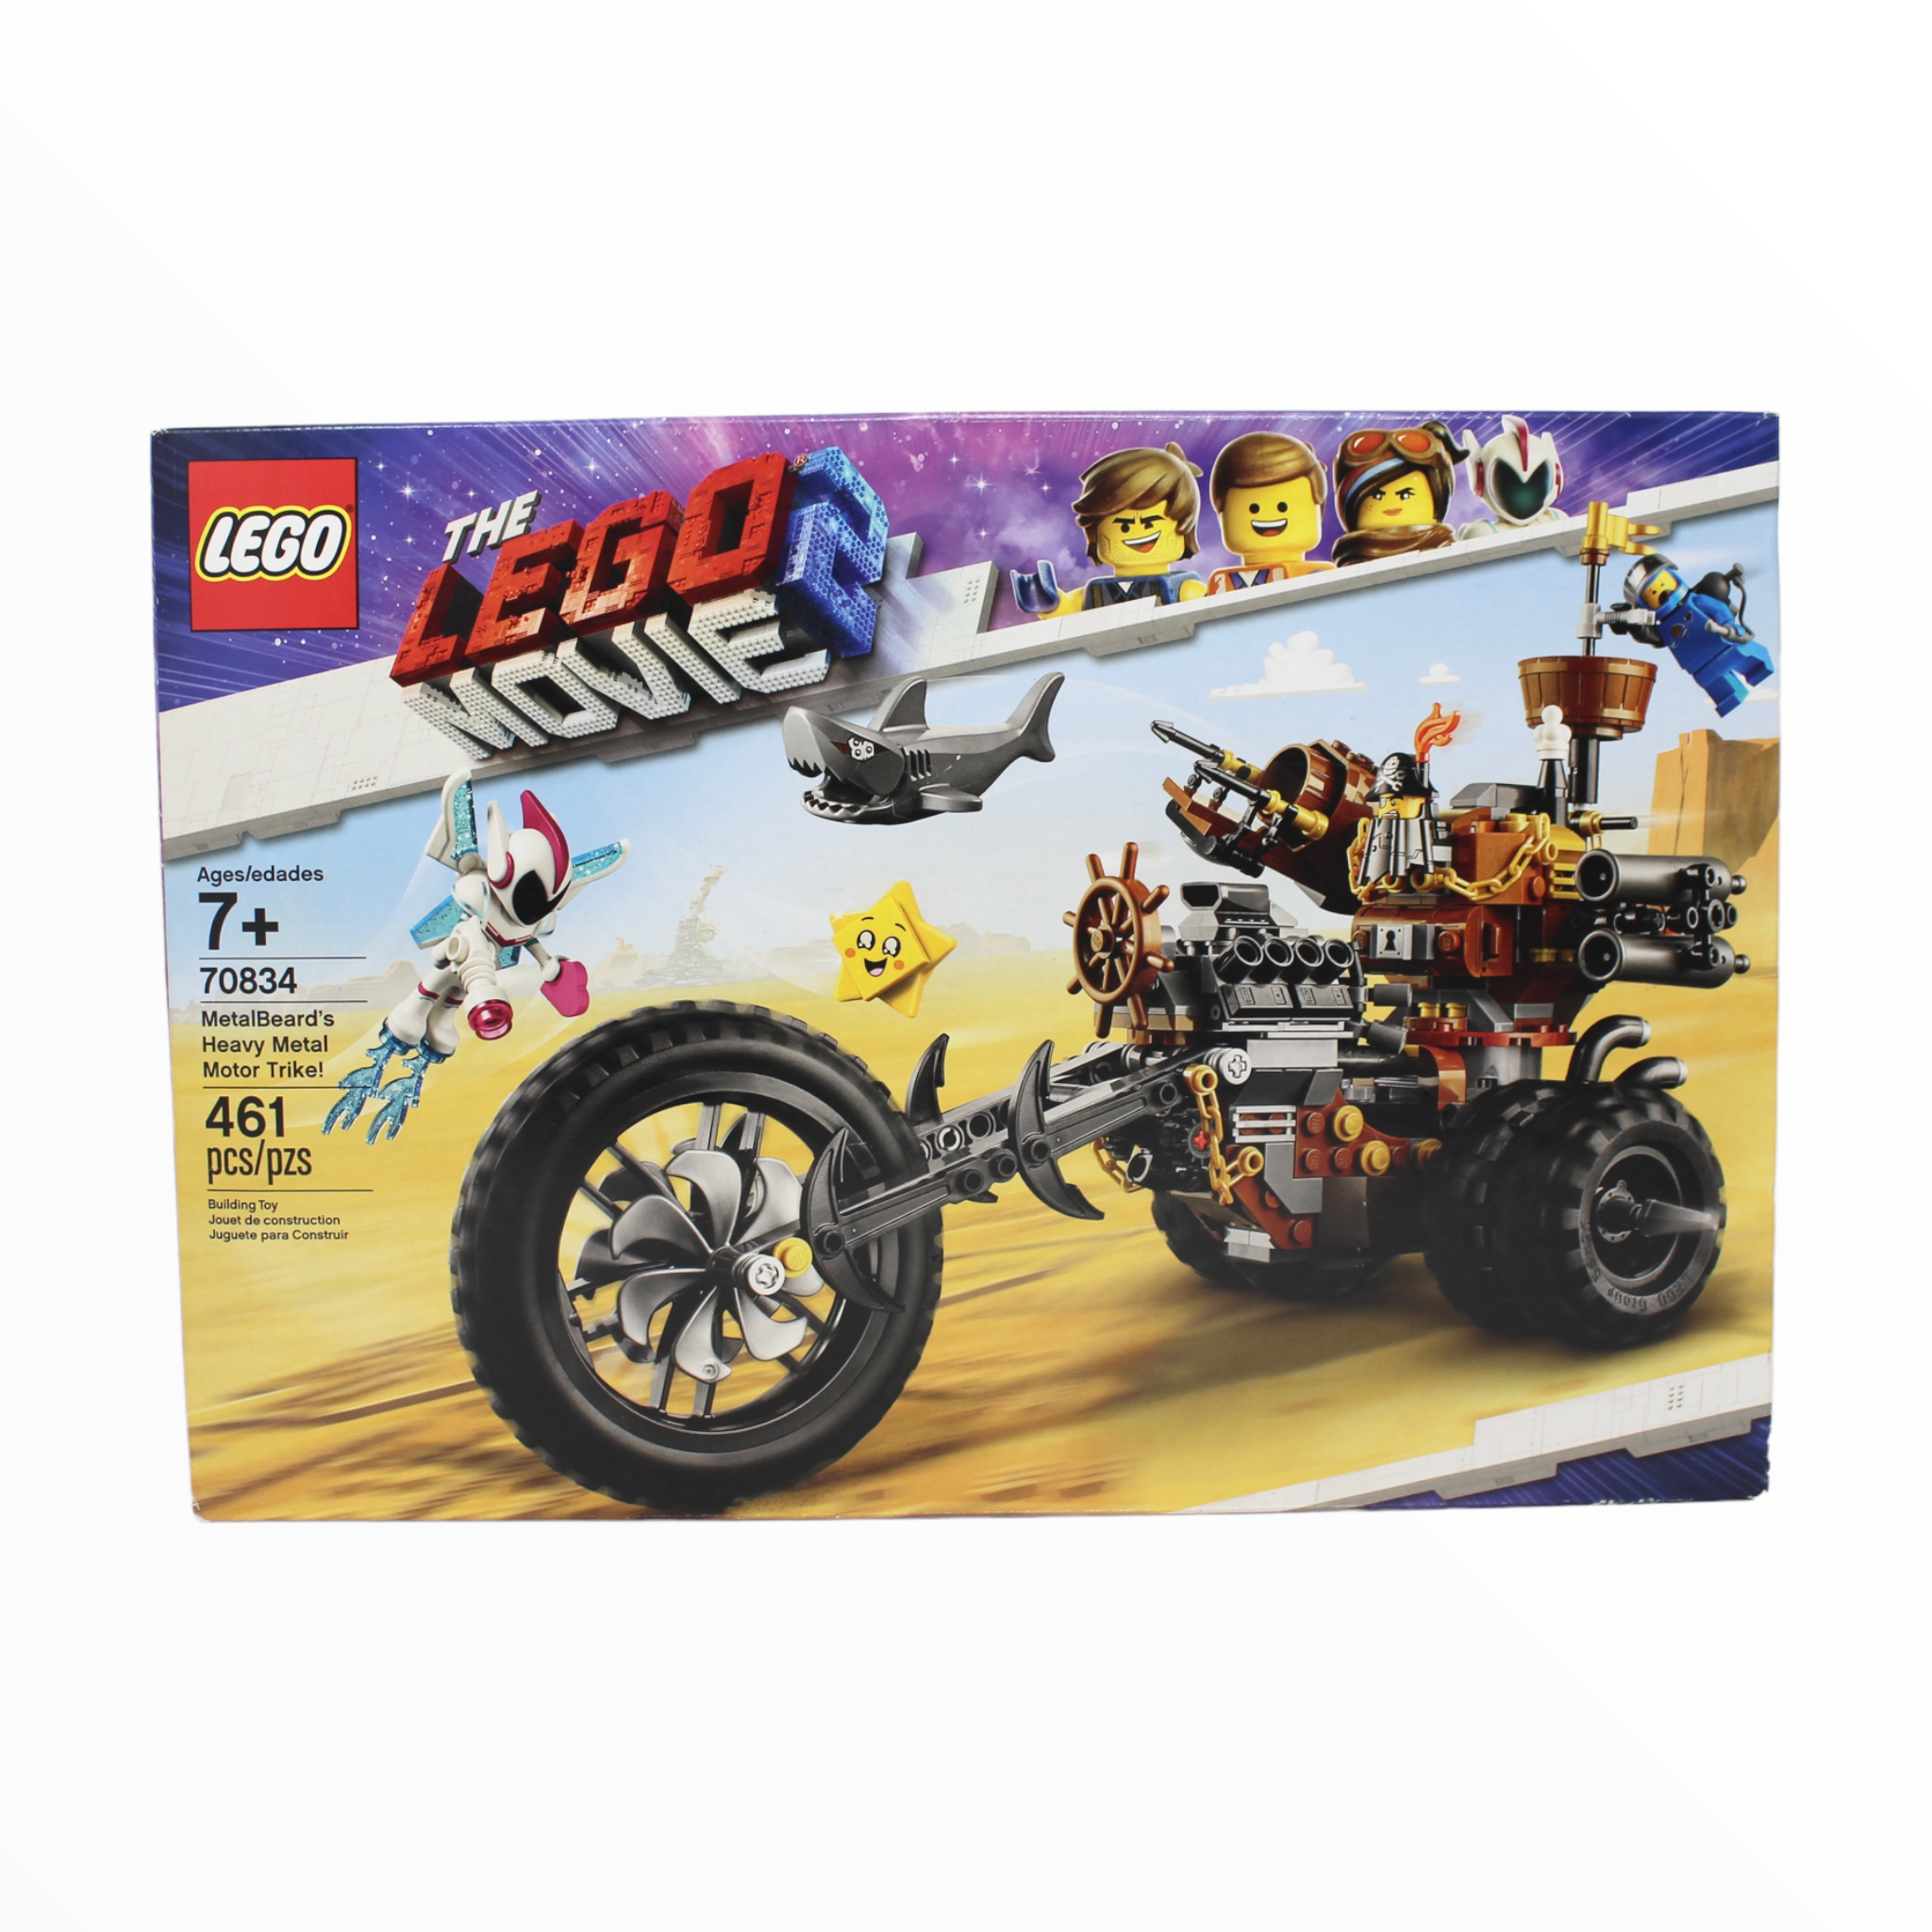 Retired Set 70834 The LEGO Movie 2 MetalBeard’s Heavy Metal Motor Trike!